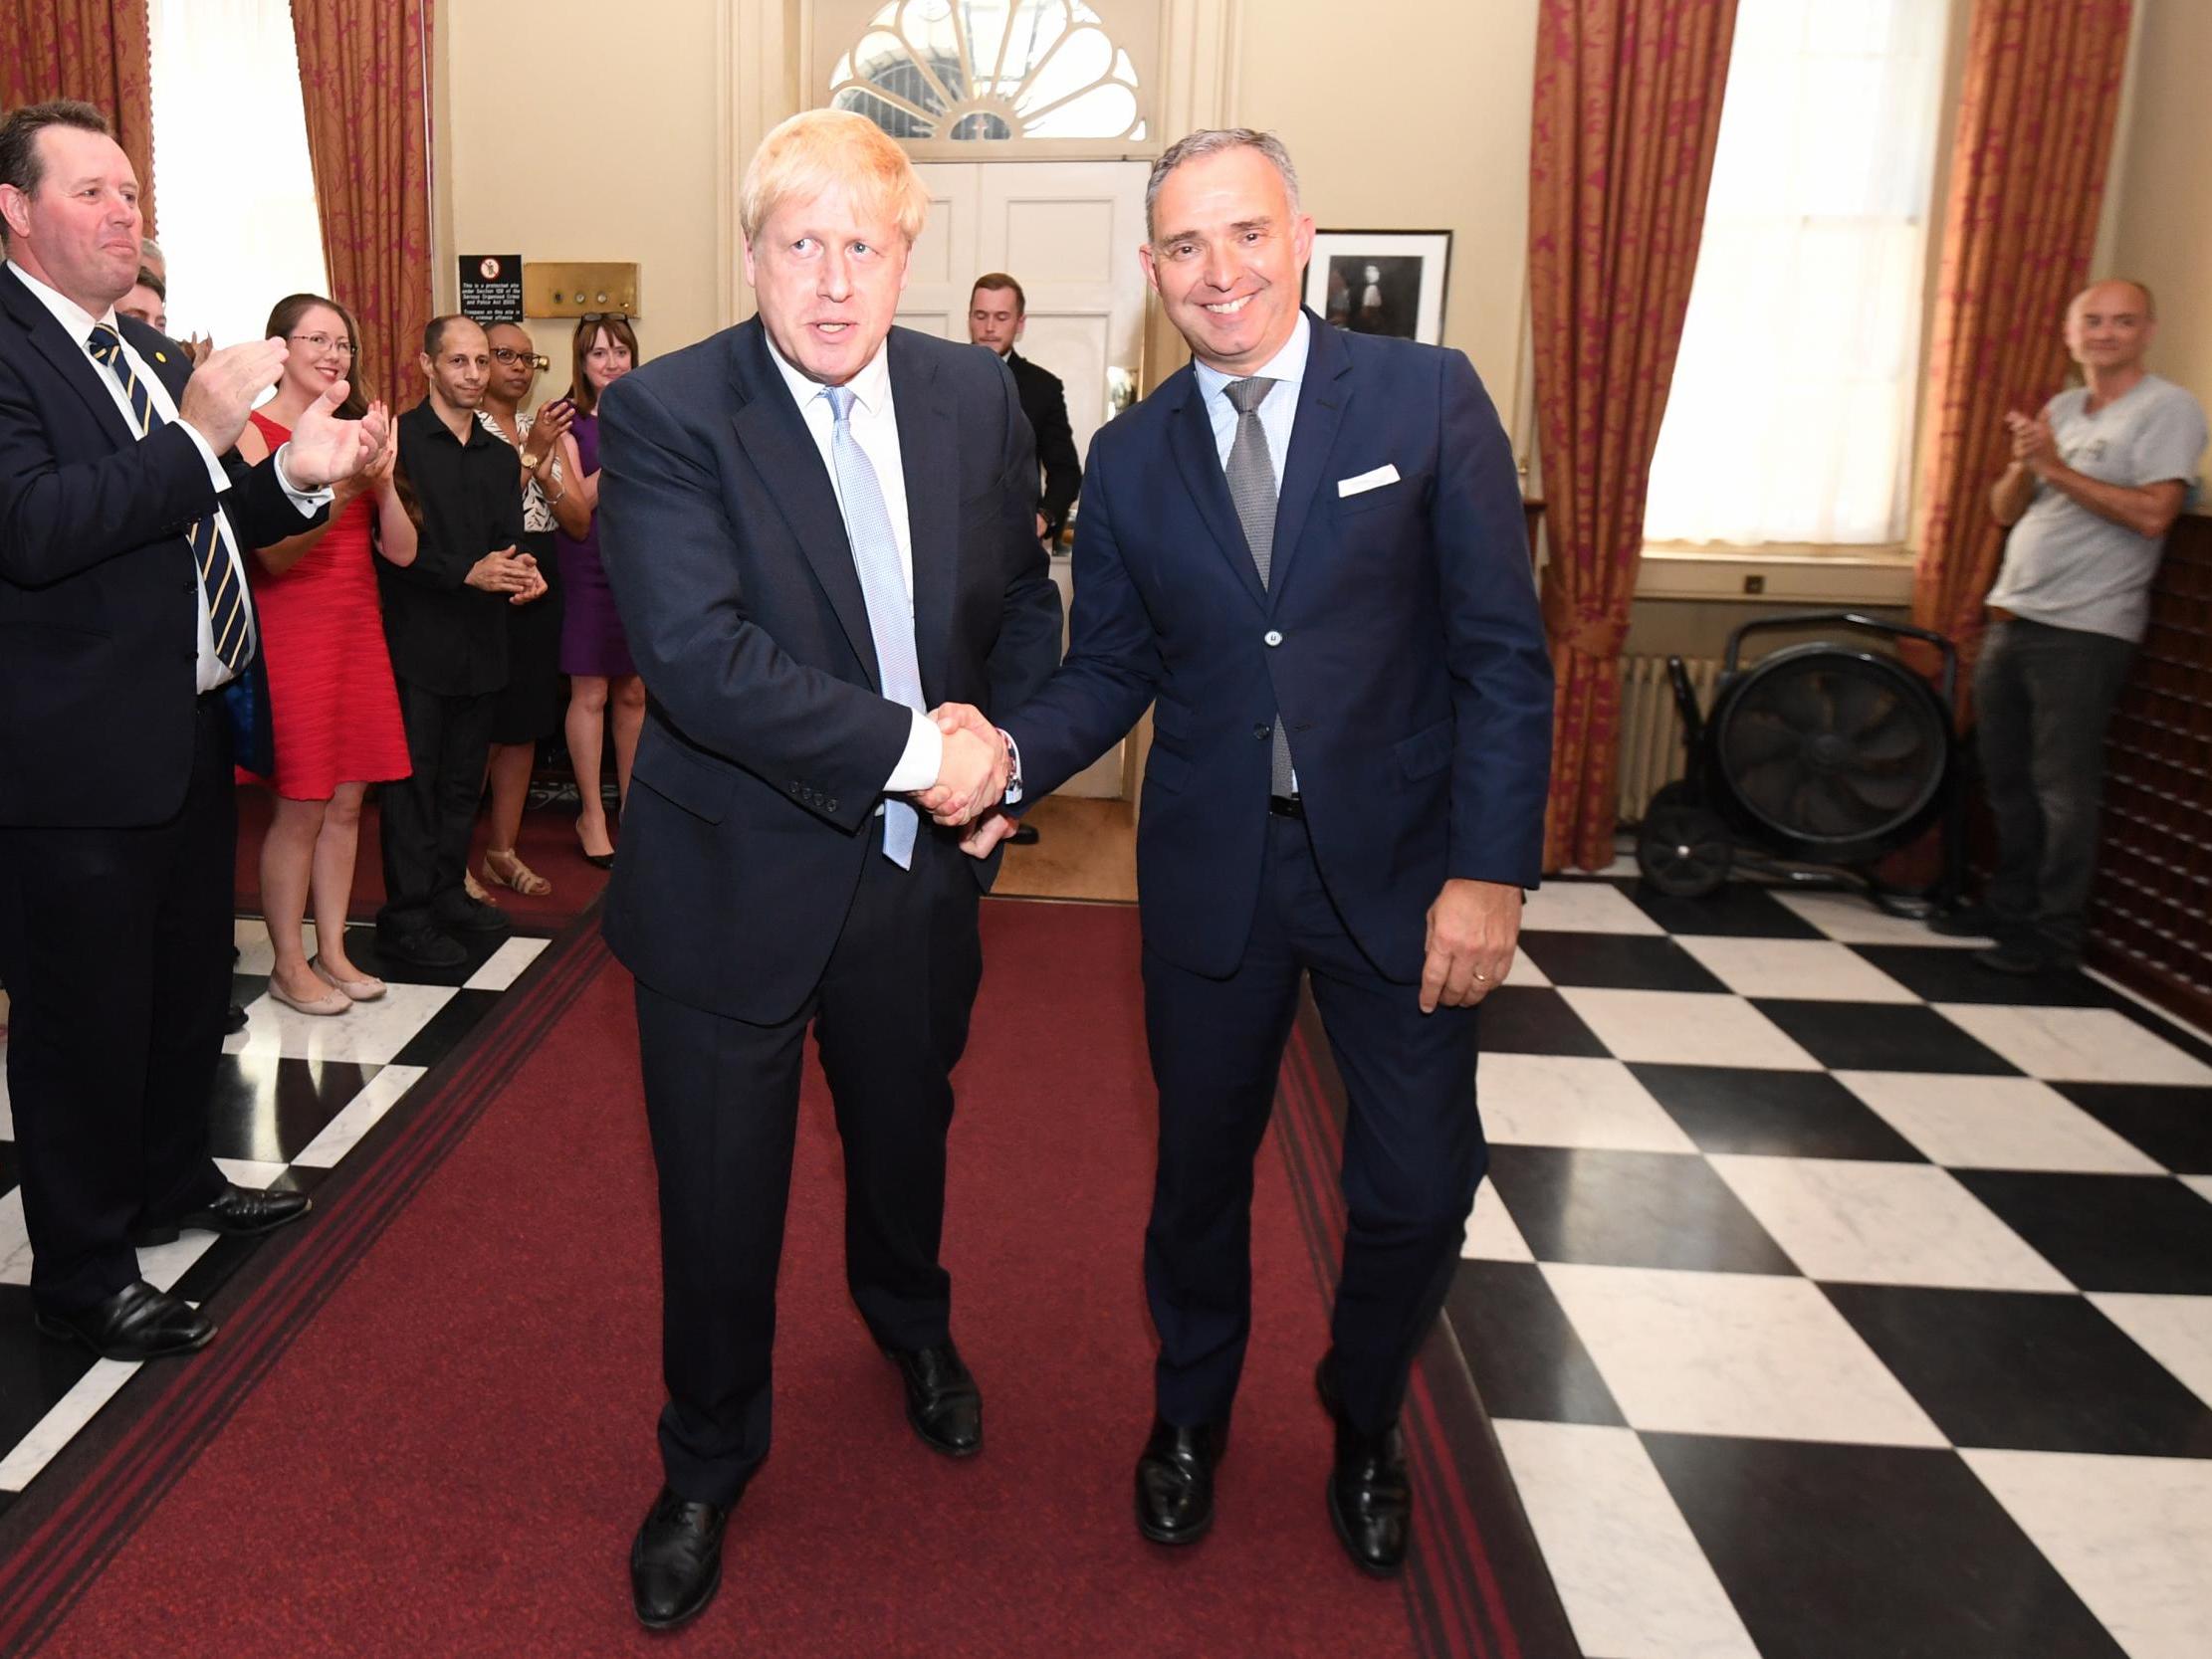 Boris Johnson shakes hands with Sir Mark Sedwill